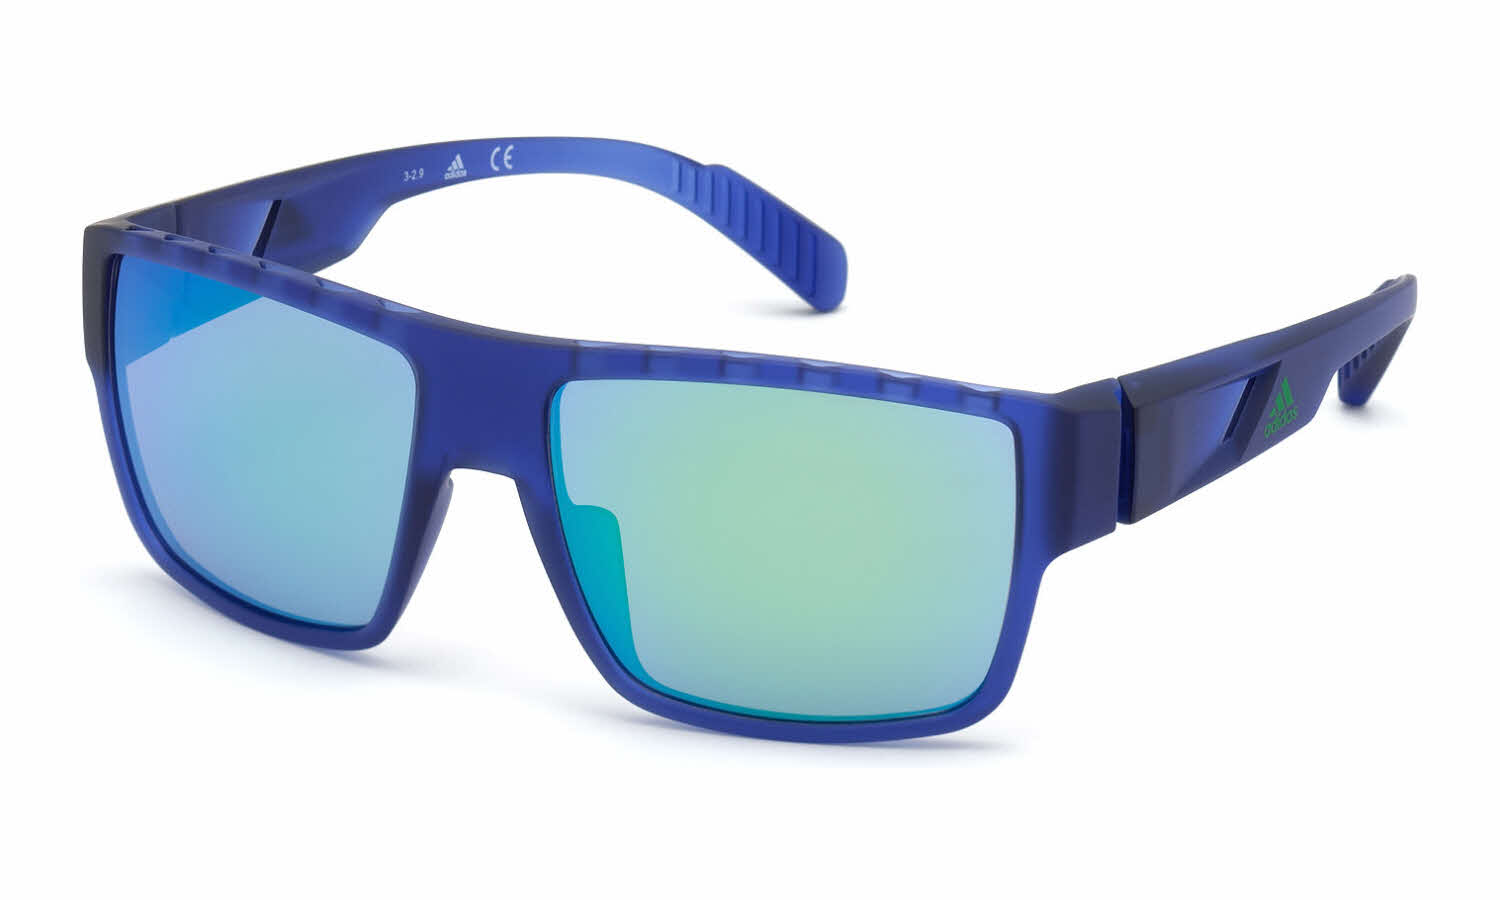 Adidas SP0006 Sunglasses